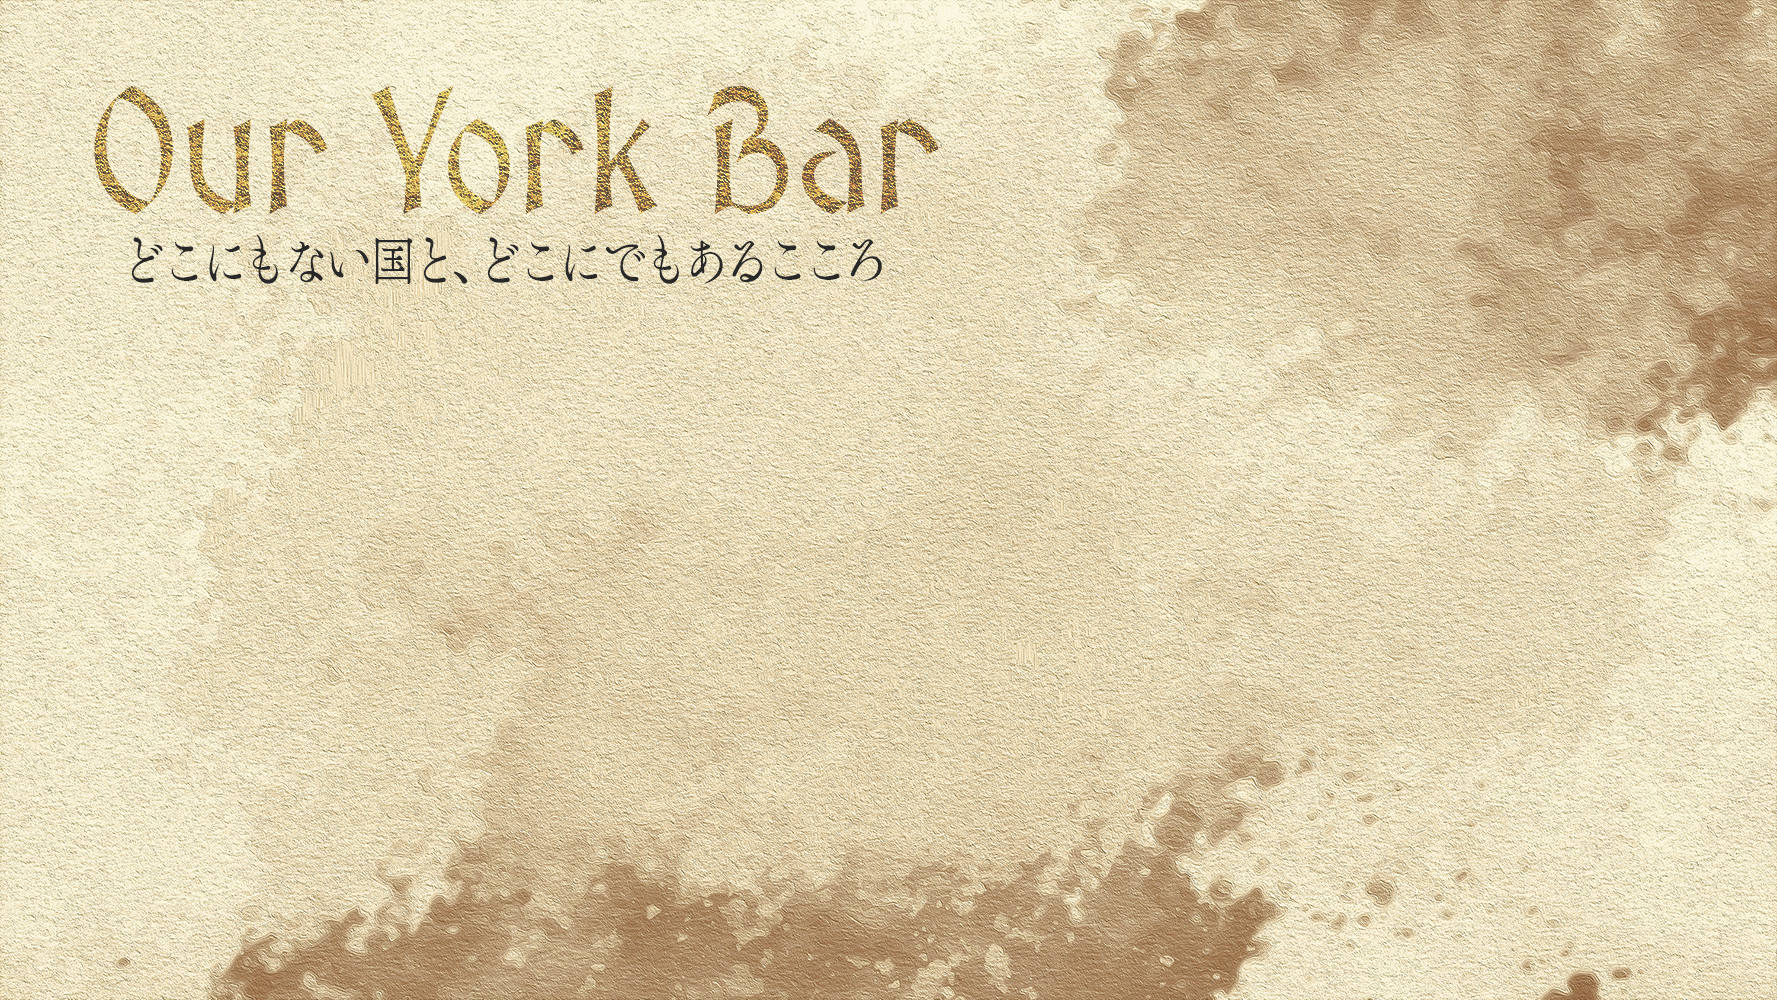 Our York Bar